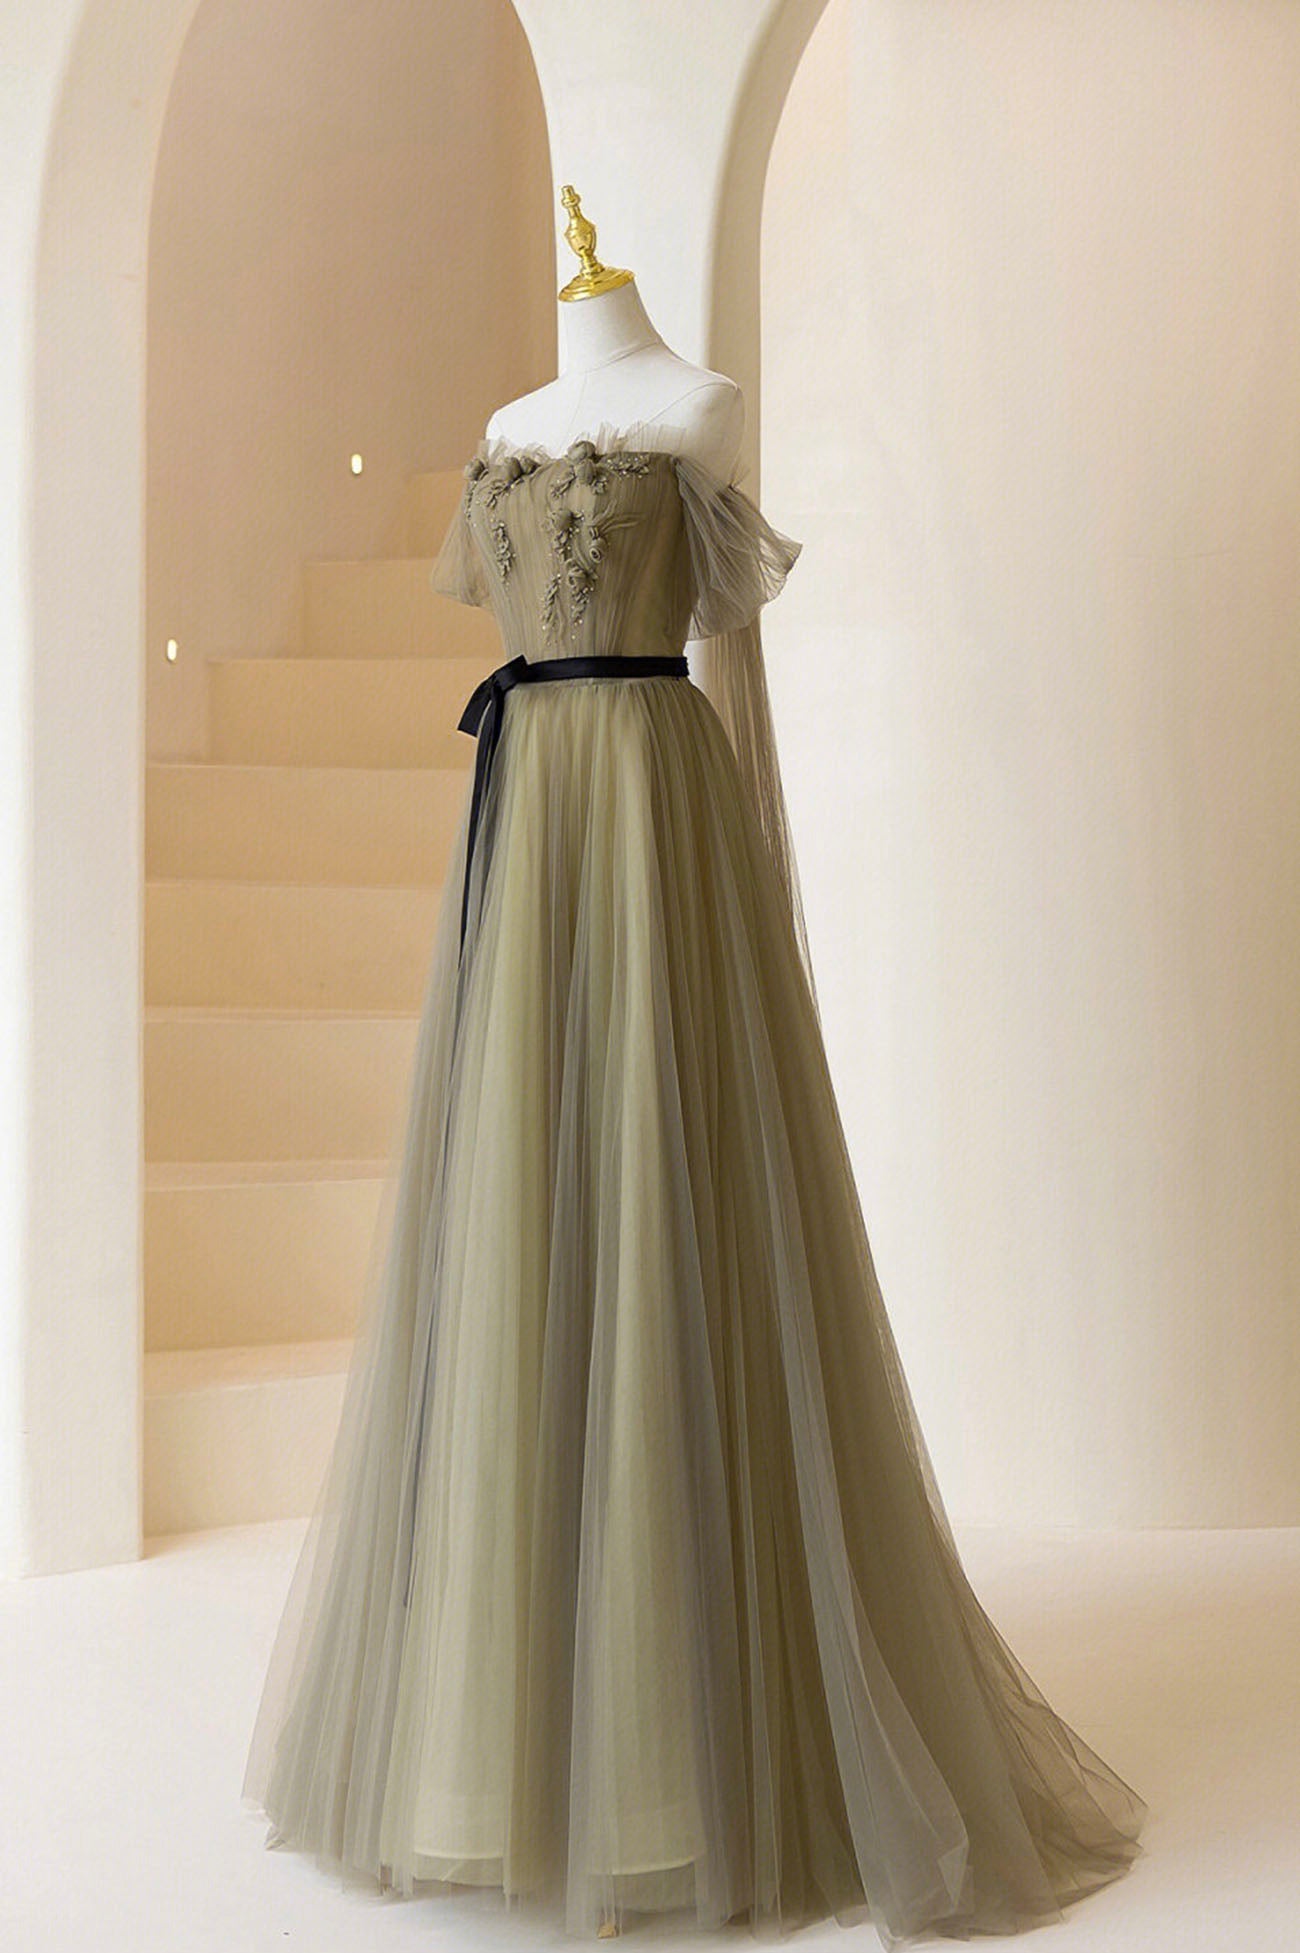 A-Line Tulle Long Corset Prom Dress, Off the Shoulder Corset Formal Evening Dress outfit, Vintage Dress